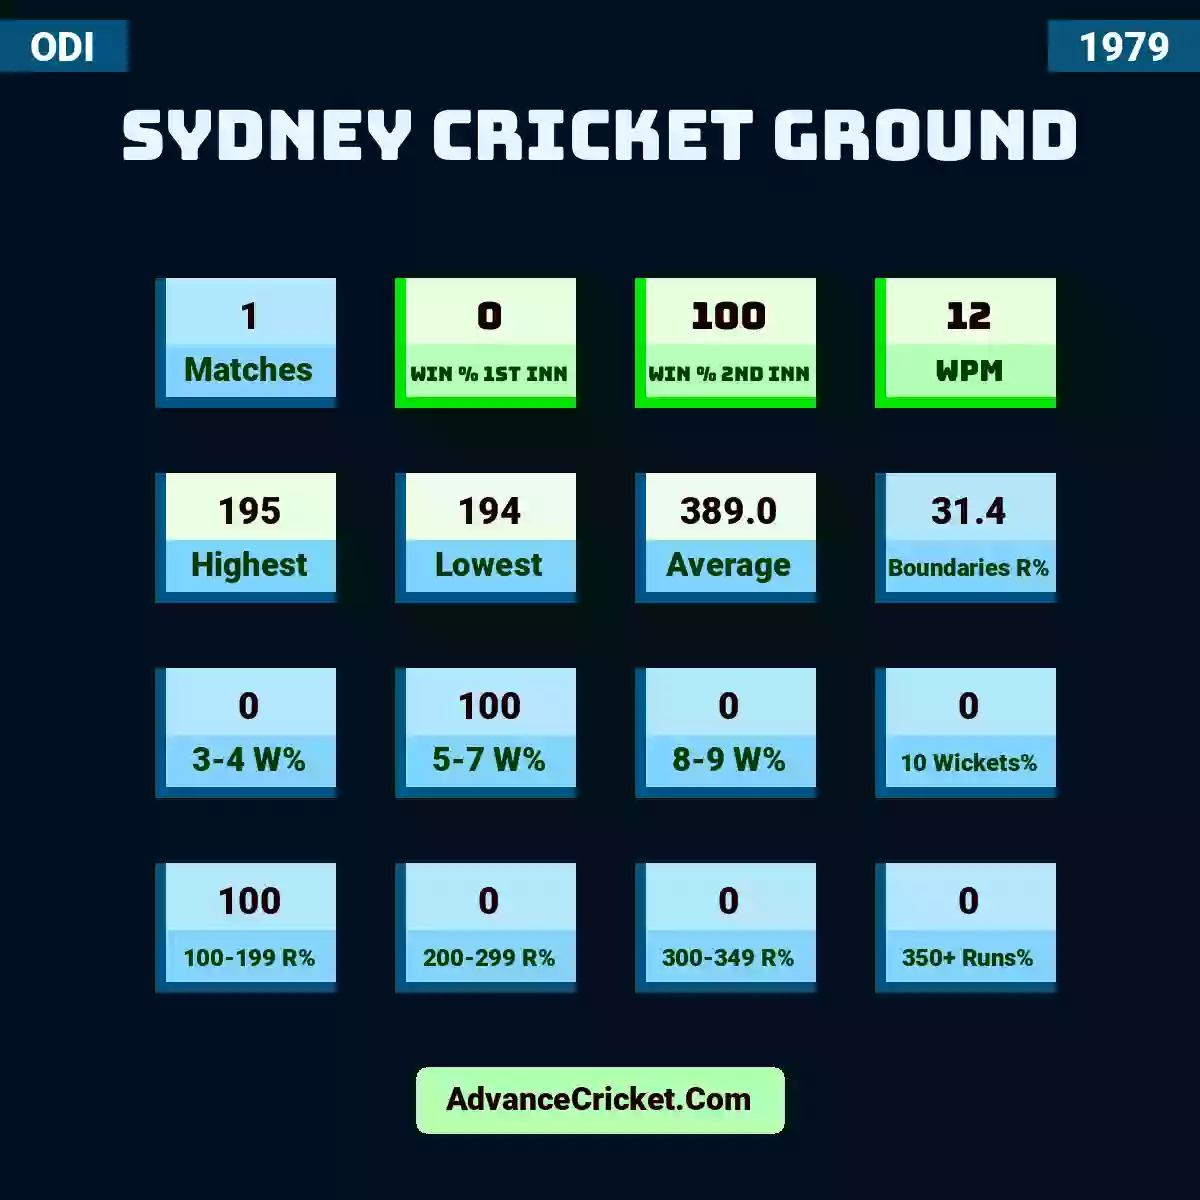 Image showing Sydney Cricket Ground with Matches: 1, Win % 1st Inn: 0, Win % 2nd Inn: 100, WPM: 12, Highest: 195, Lowest: 194, Average: 389.0, Boundaries R%: 31.4, 3-4 W%: 0, 5-7 W%: 100, 8-9 W%: 0, 10 Wickets%: 0, 100-199 R%: 100, 200-299 R%: 0, 300-349 R%: 0, 350+ Runs%: 0.